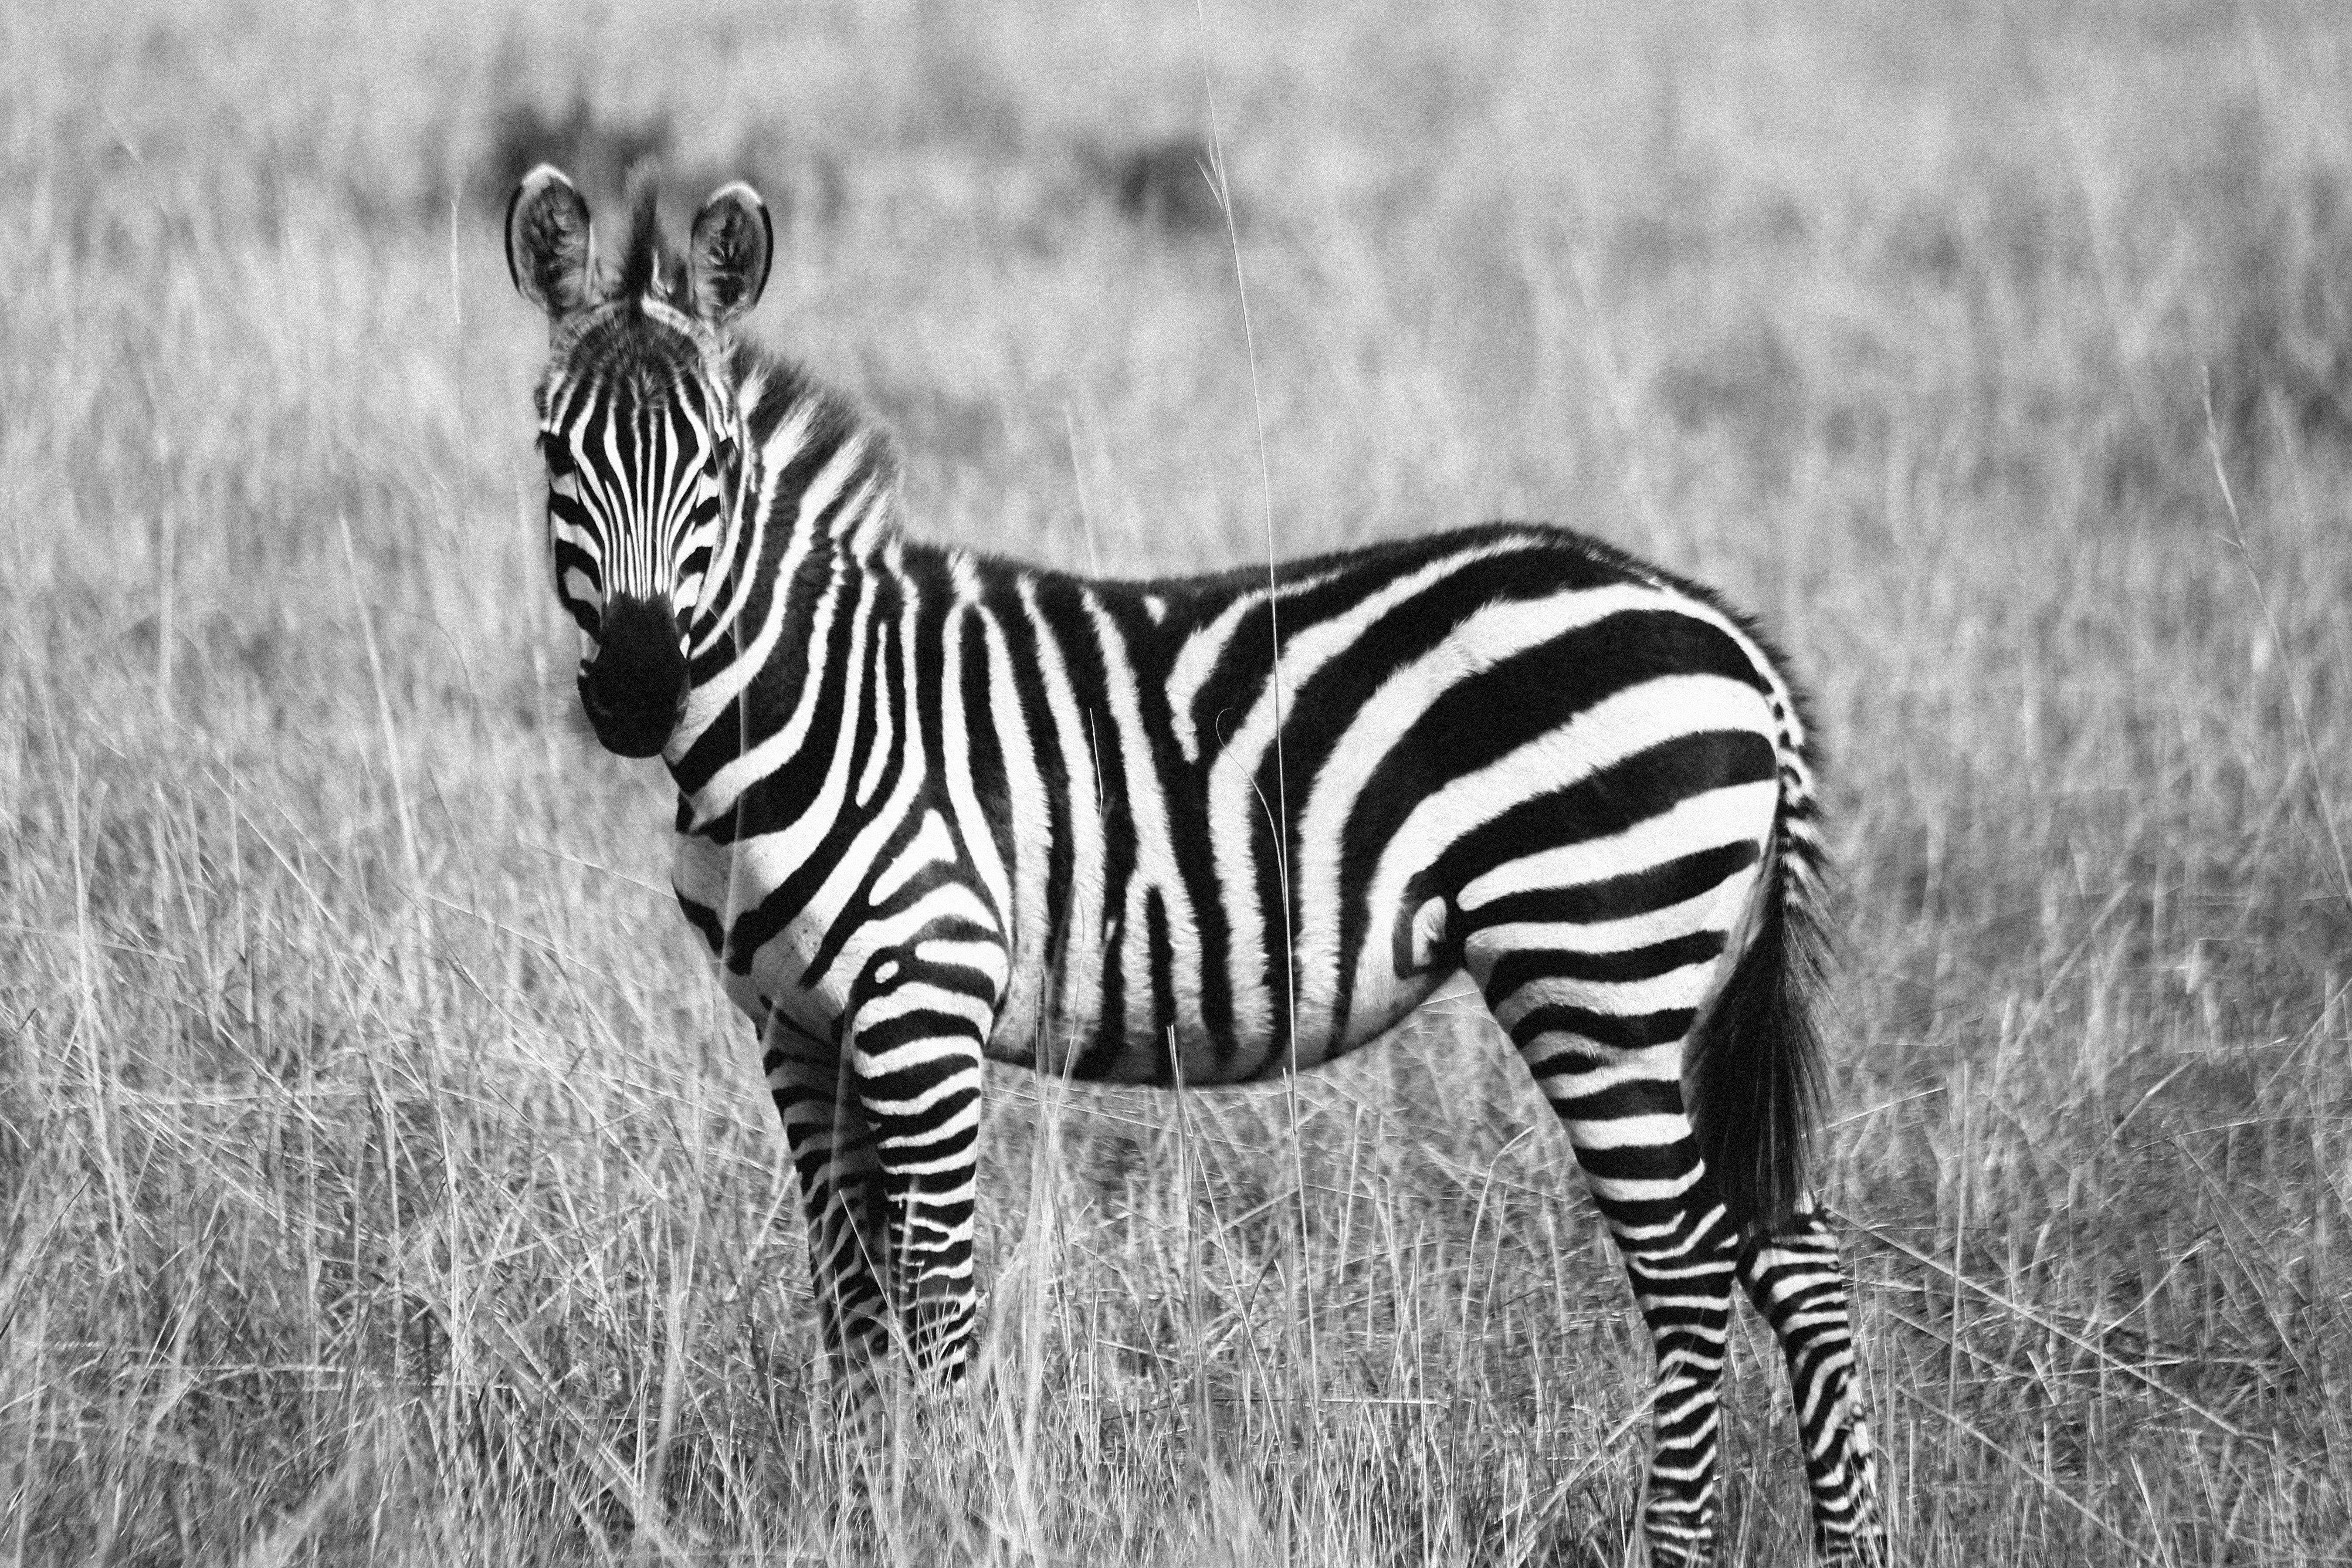 Zebra on Grassland Grayscale Photography, Africa, Wildlife, Wild, Travel, HQ Photo